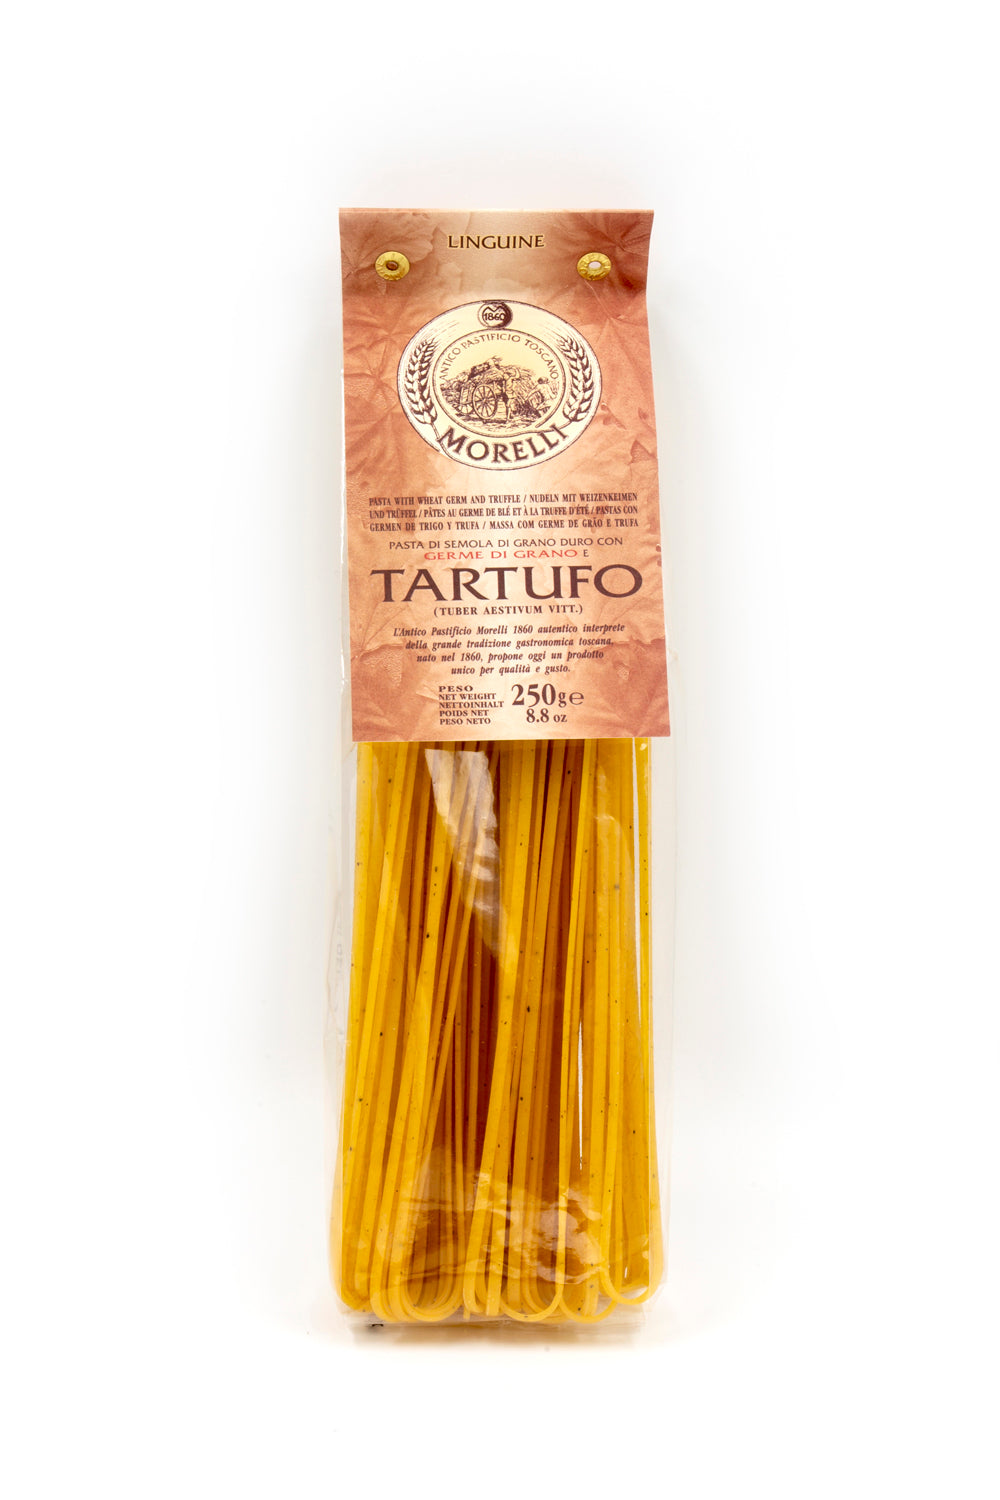 Morelli Linguine Pasta al Tartufo (truffle) 250g